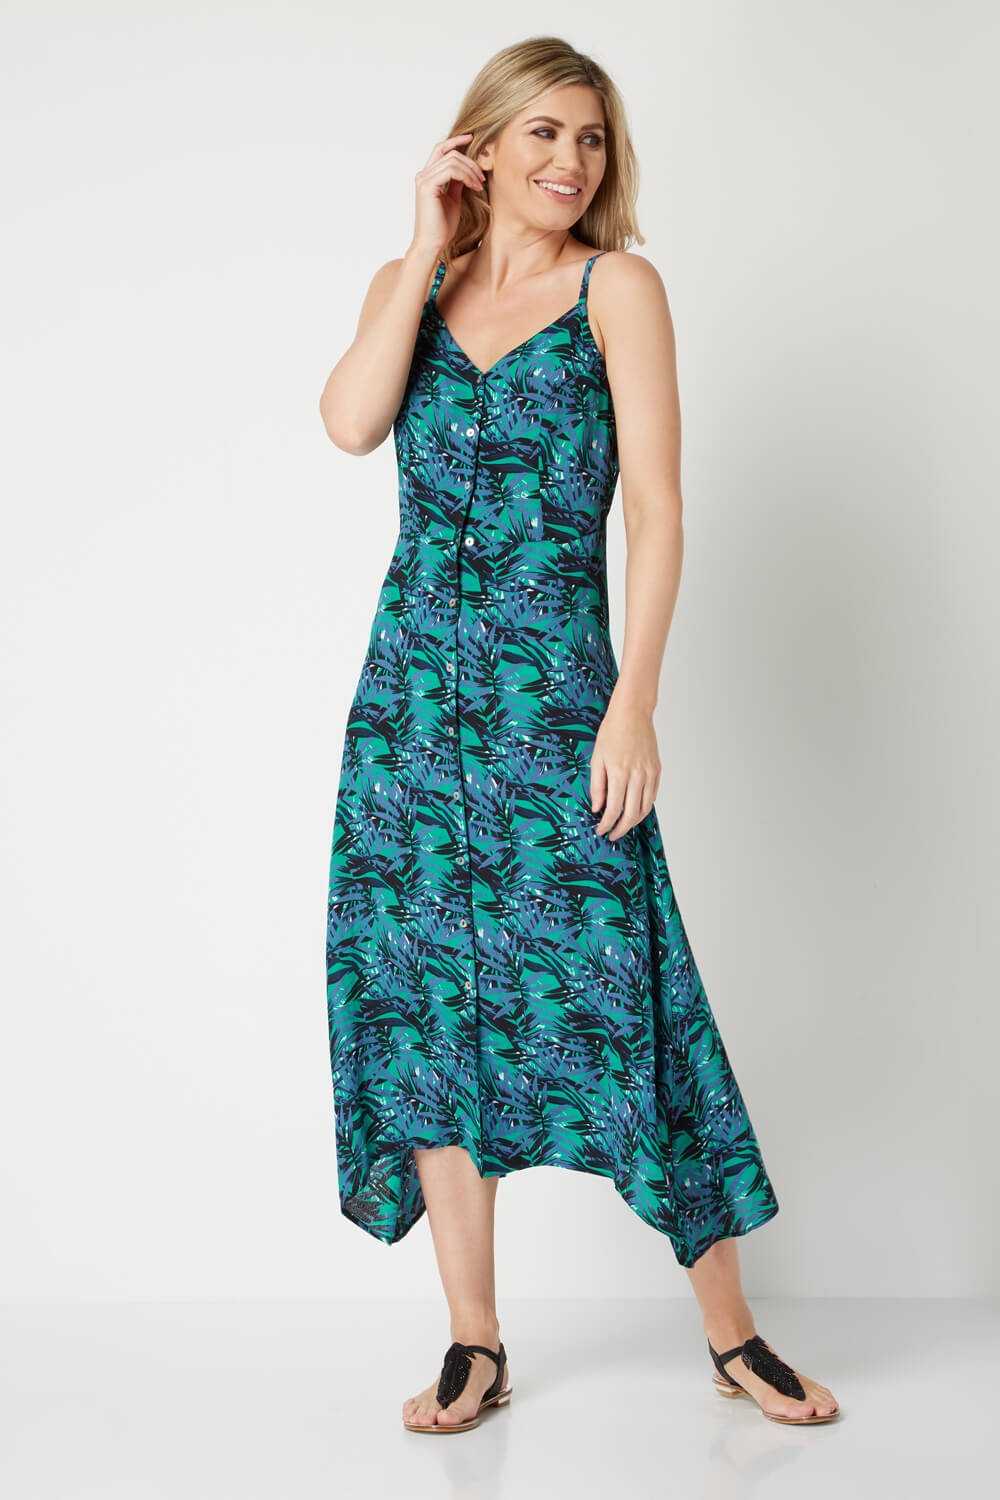 Green Sleeveless Palm Print Sun Dress, Image 2 of 4